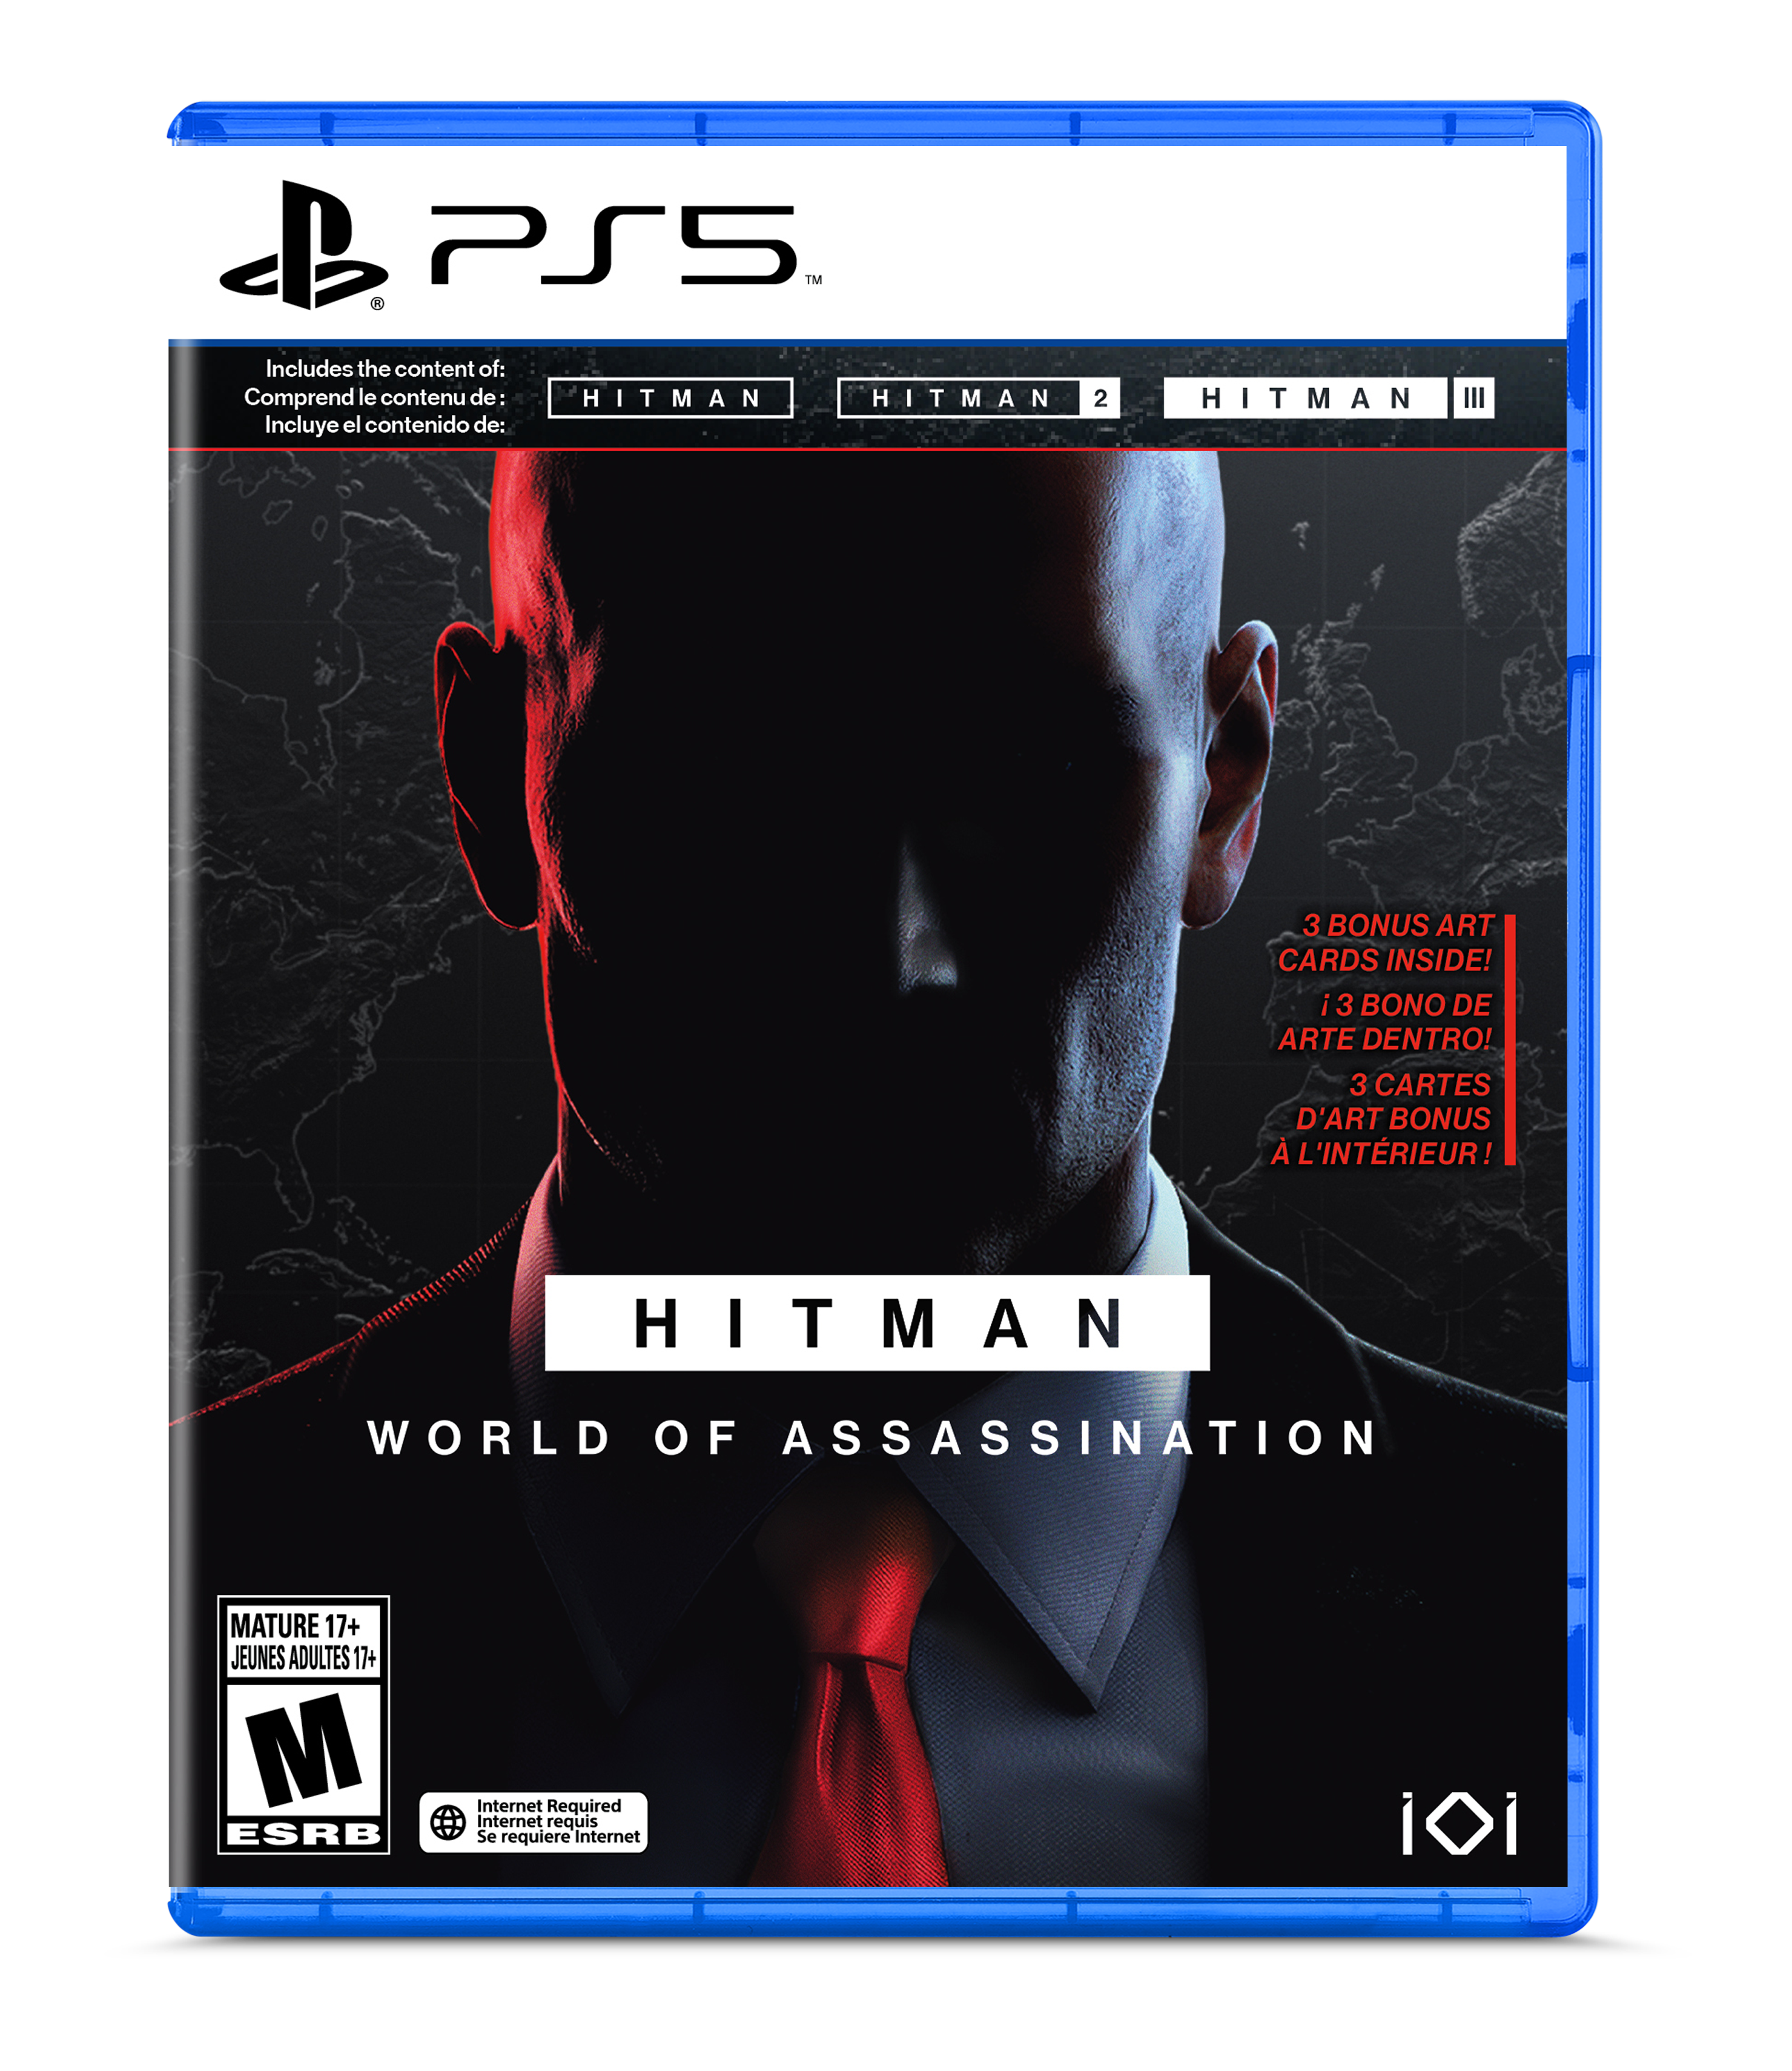 HITMAN 3 - PlayStation 5 | PlayStation 5 | GameStop